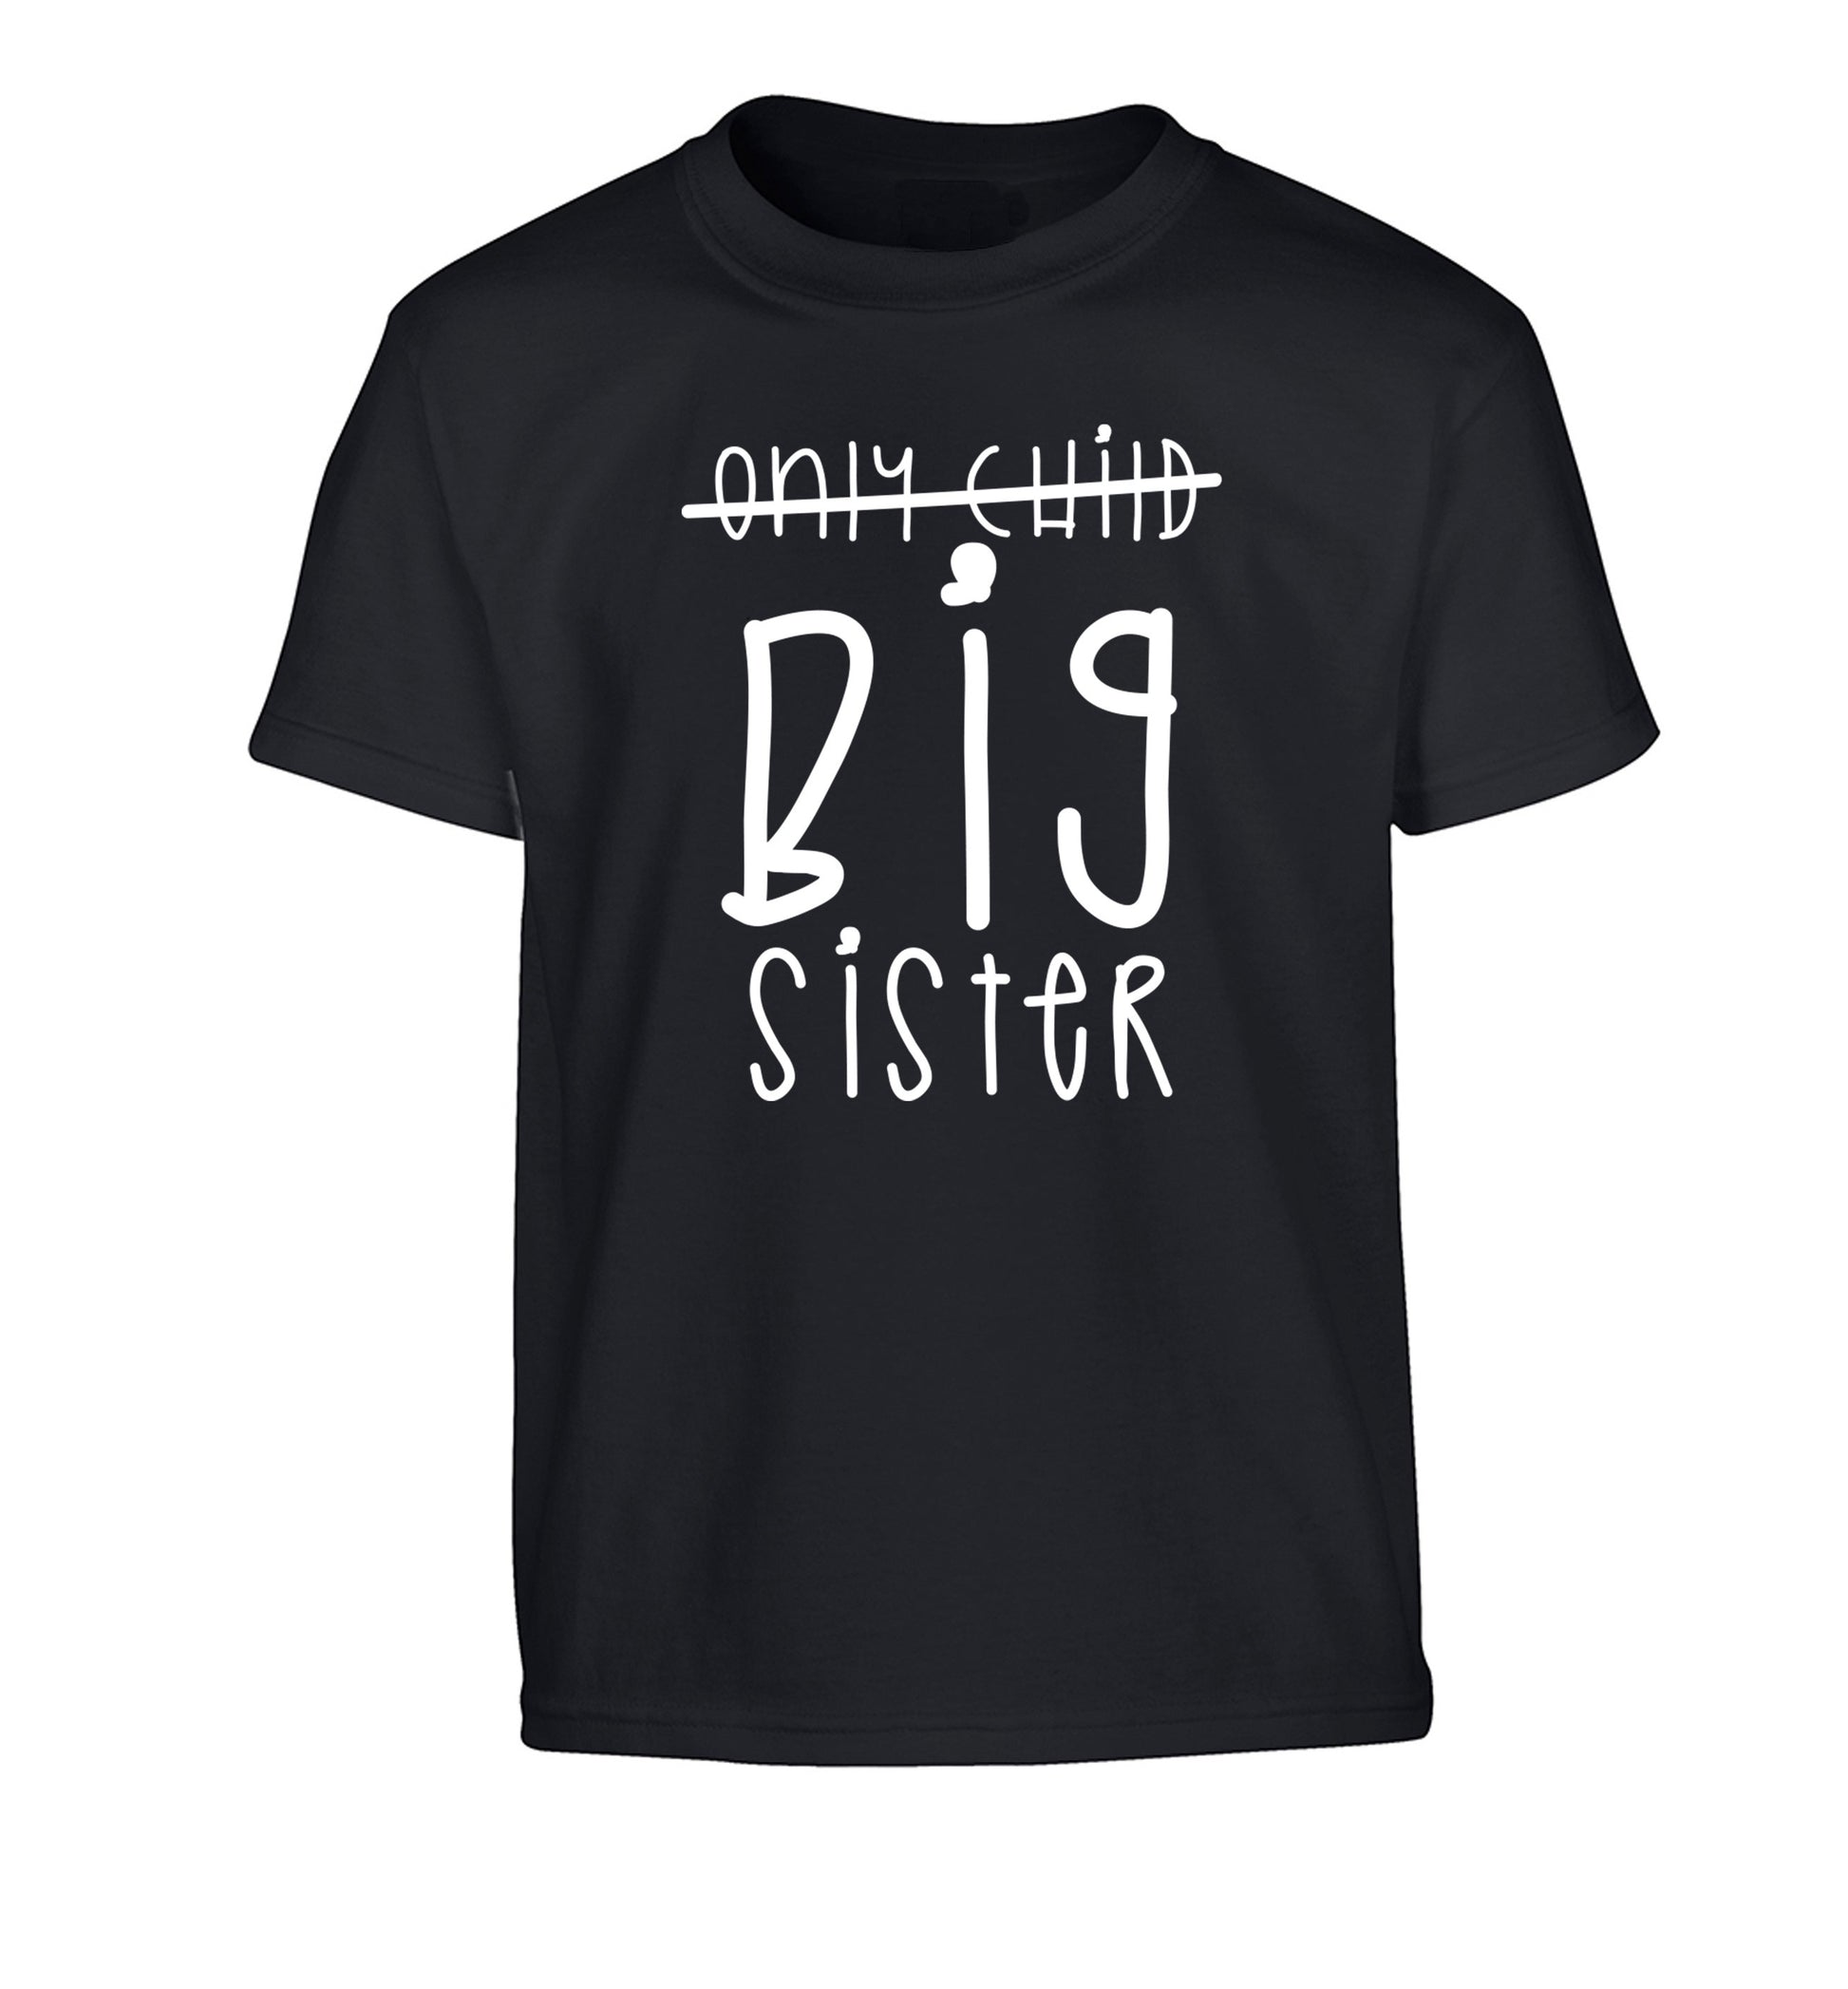 Only child big sister Children's black Tshirt 12-14 Years